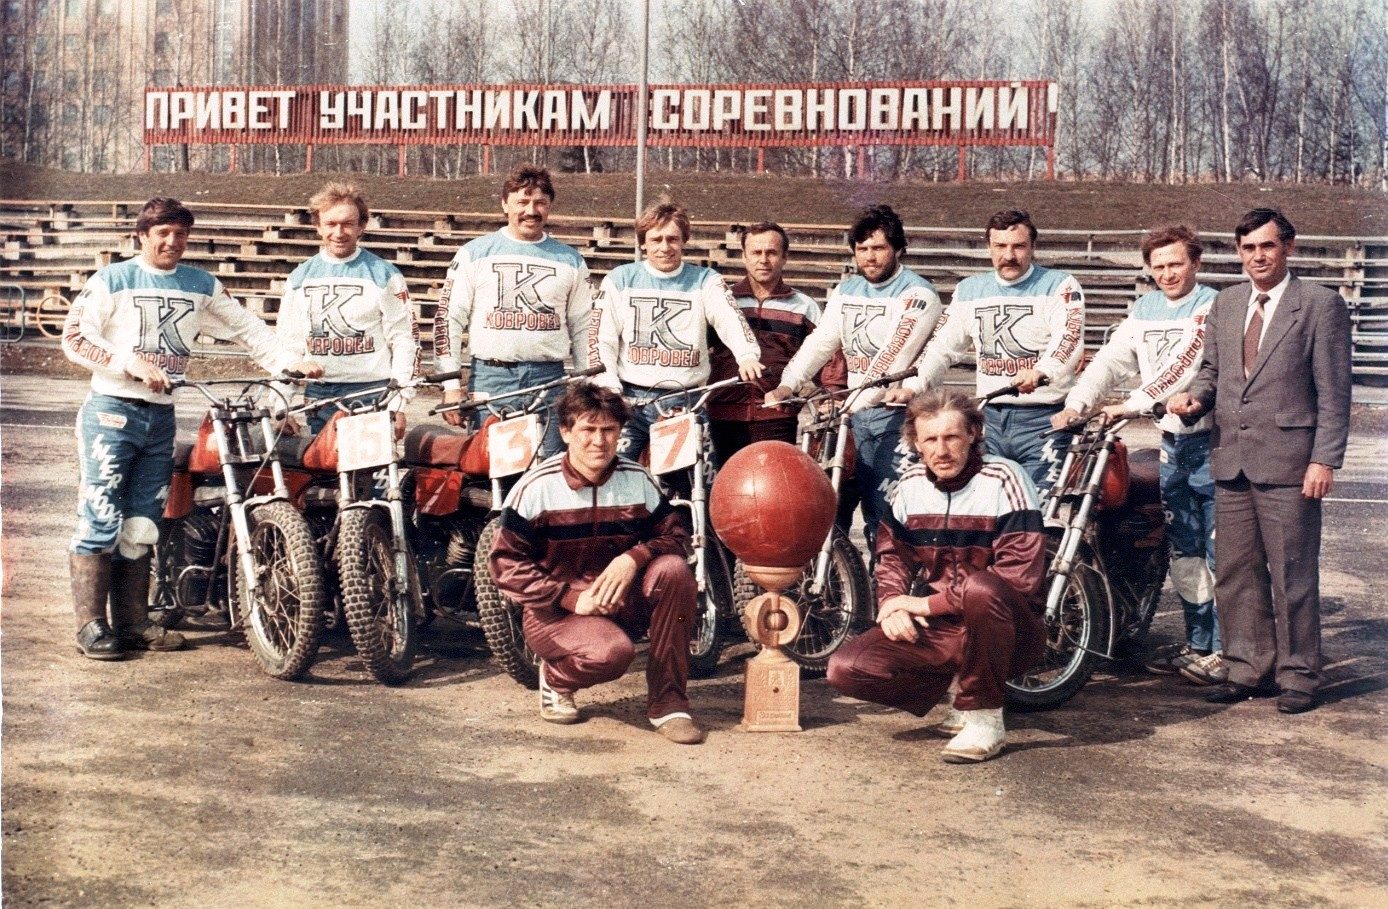 "Ковровец" (Ковров), 1988 г.